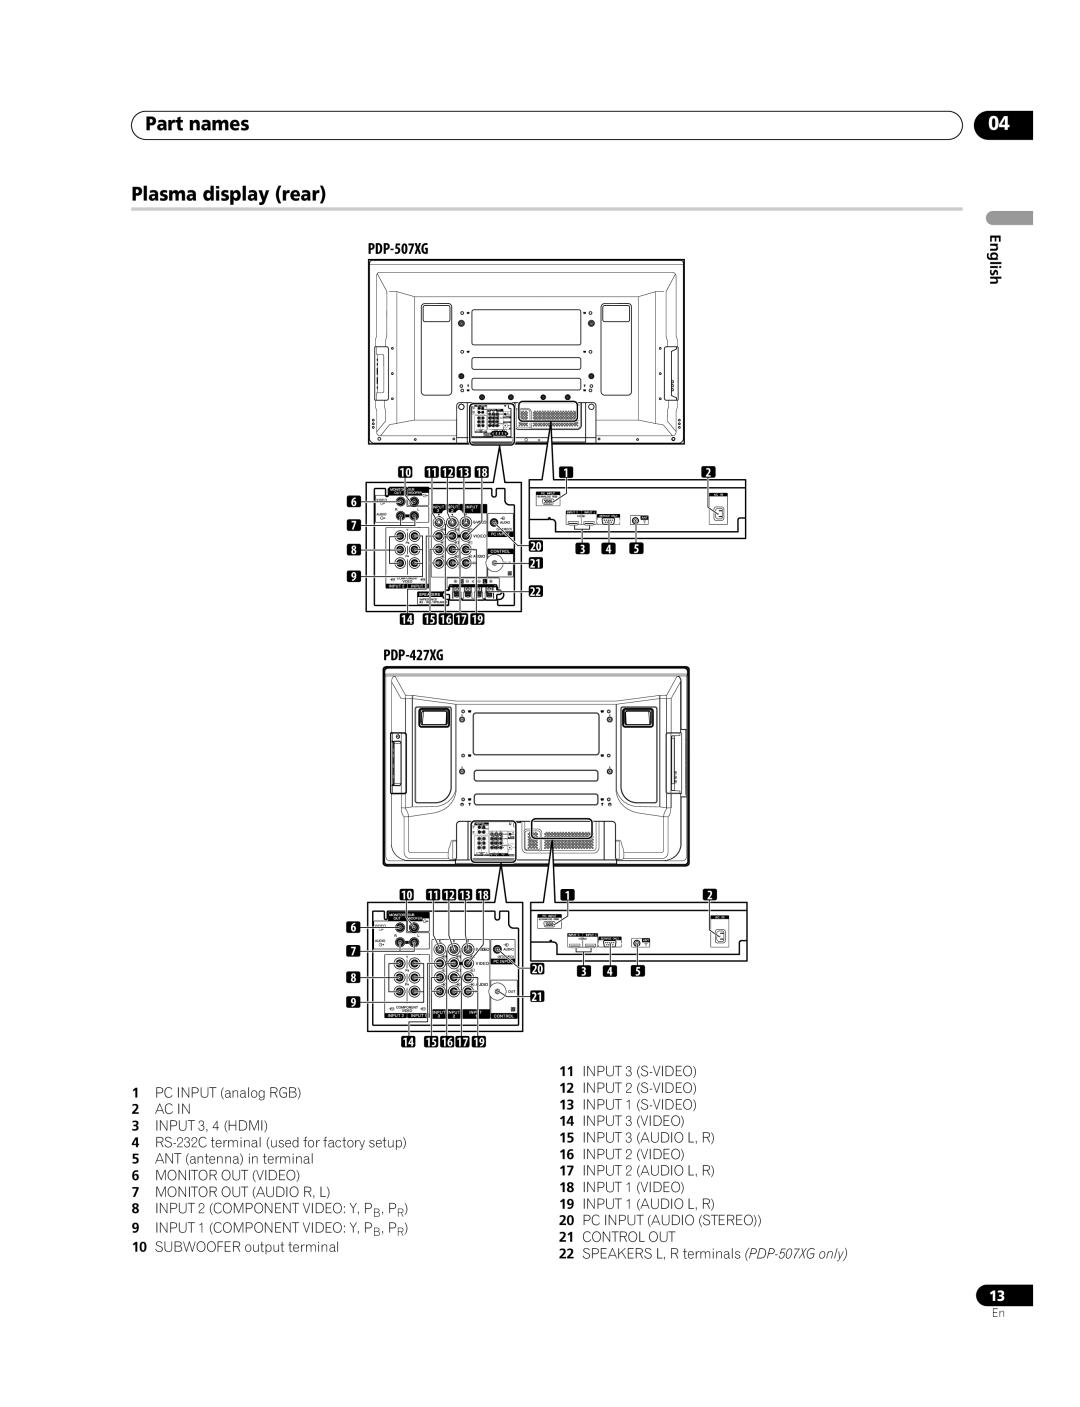 Pioneer PDP-507XG manual Part names, Plasma display rear, PDP-427XG, 10 11 12 13, 14 15 16 17 